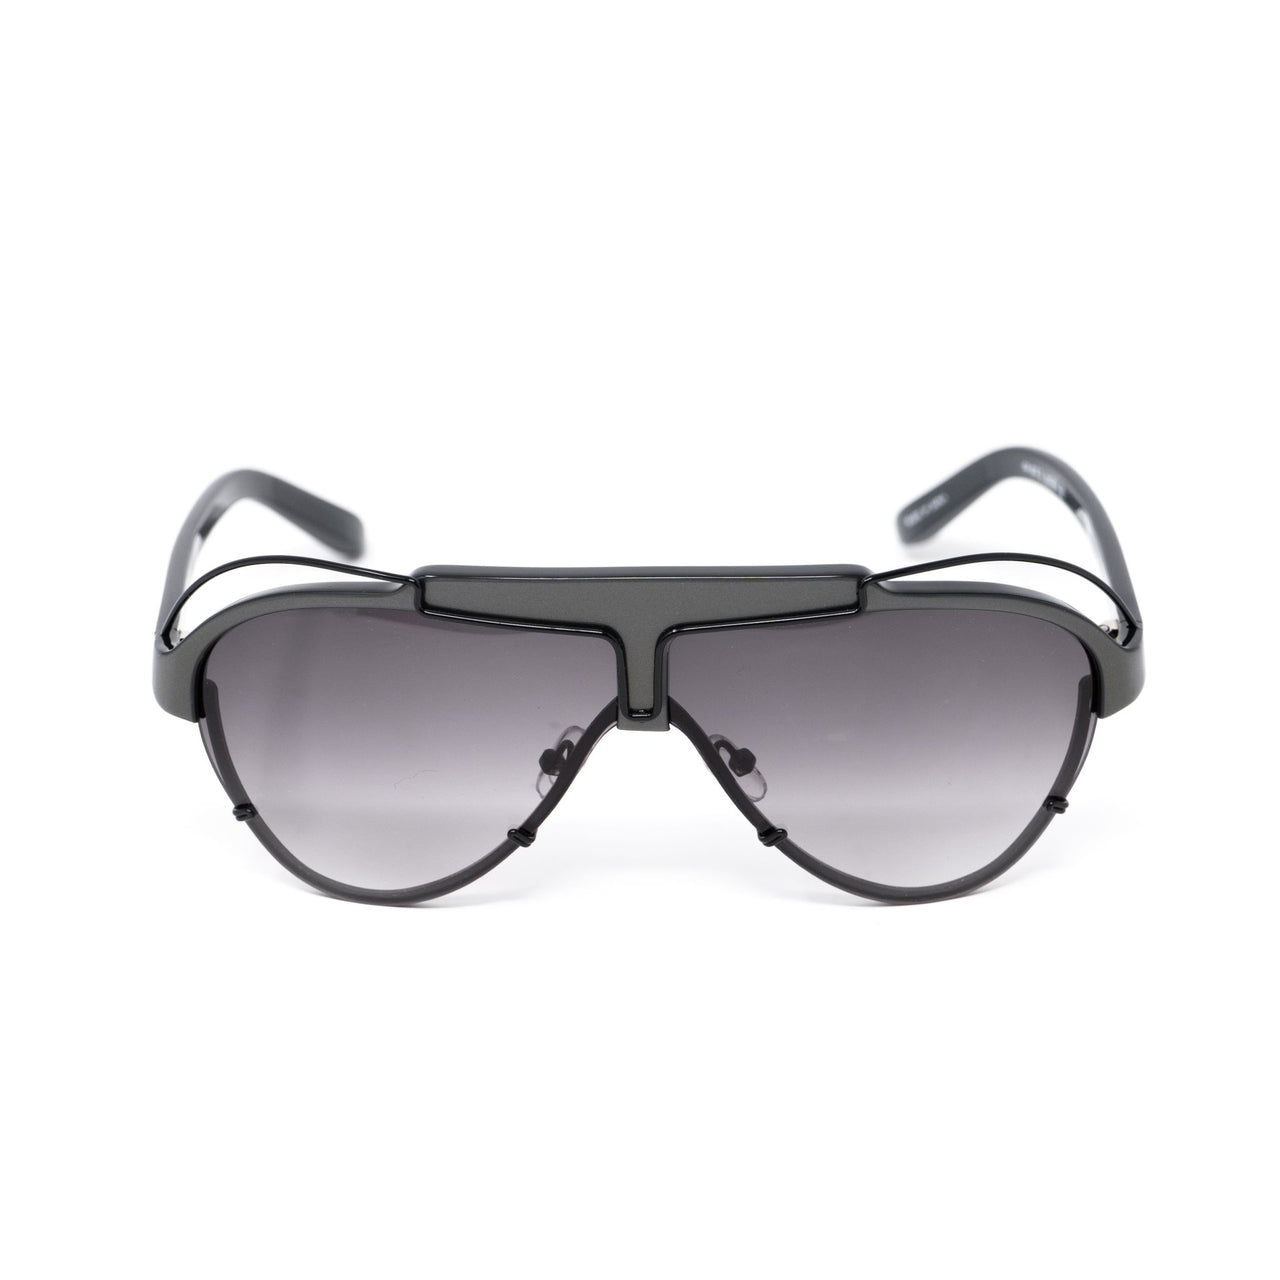 Yohji Yamamoto Unisex Sunglasses Dark Grey/Black and Purple Graduated Lenses - YY11ASTRONAUTC3SUN - Watches & Crystals